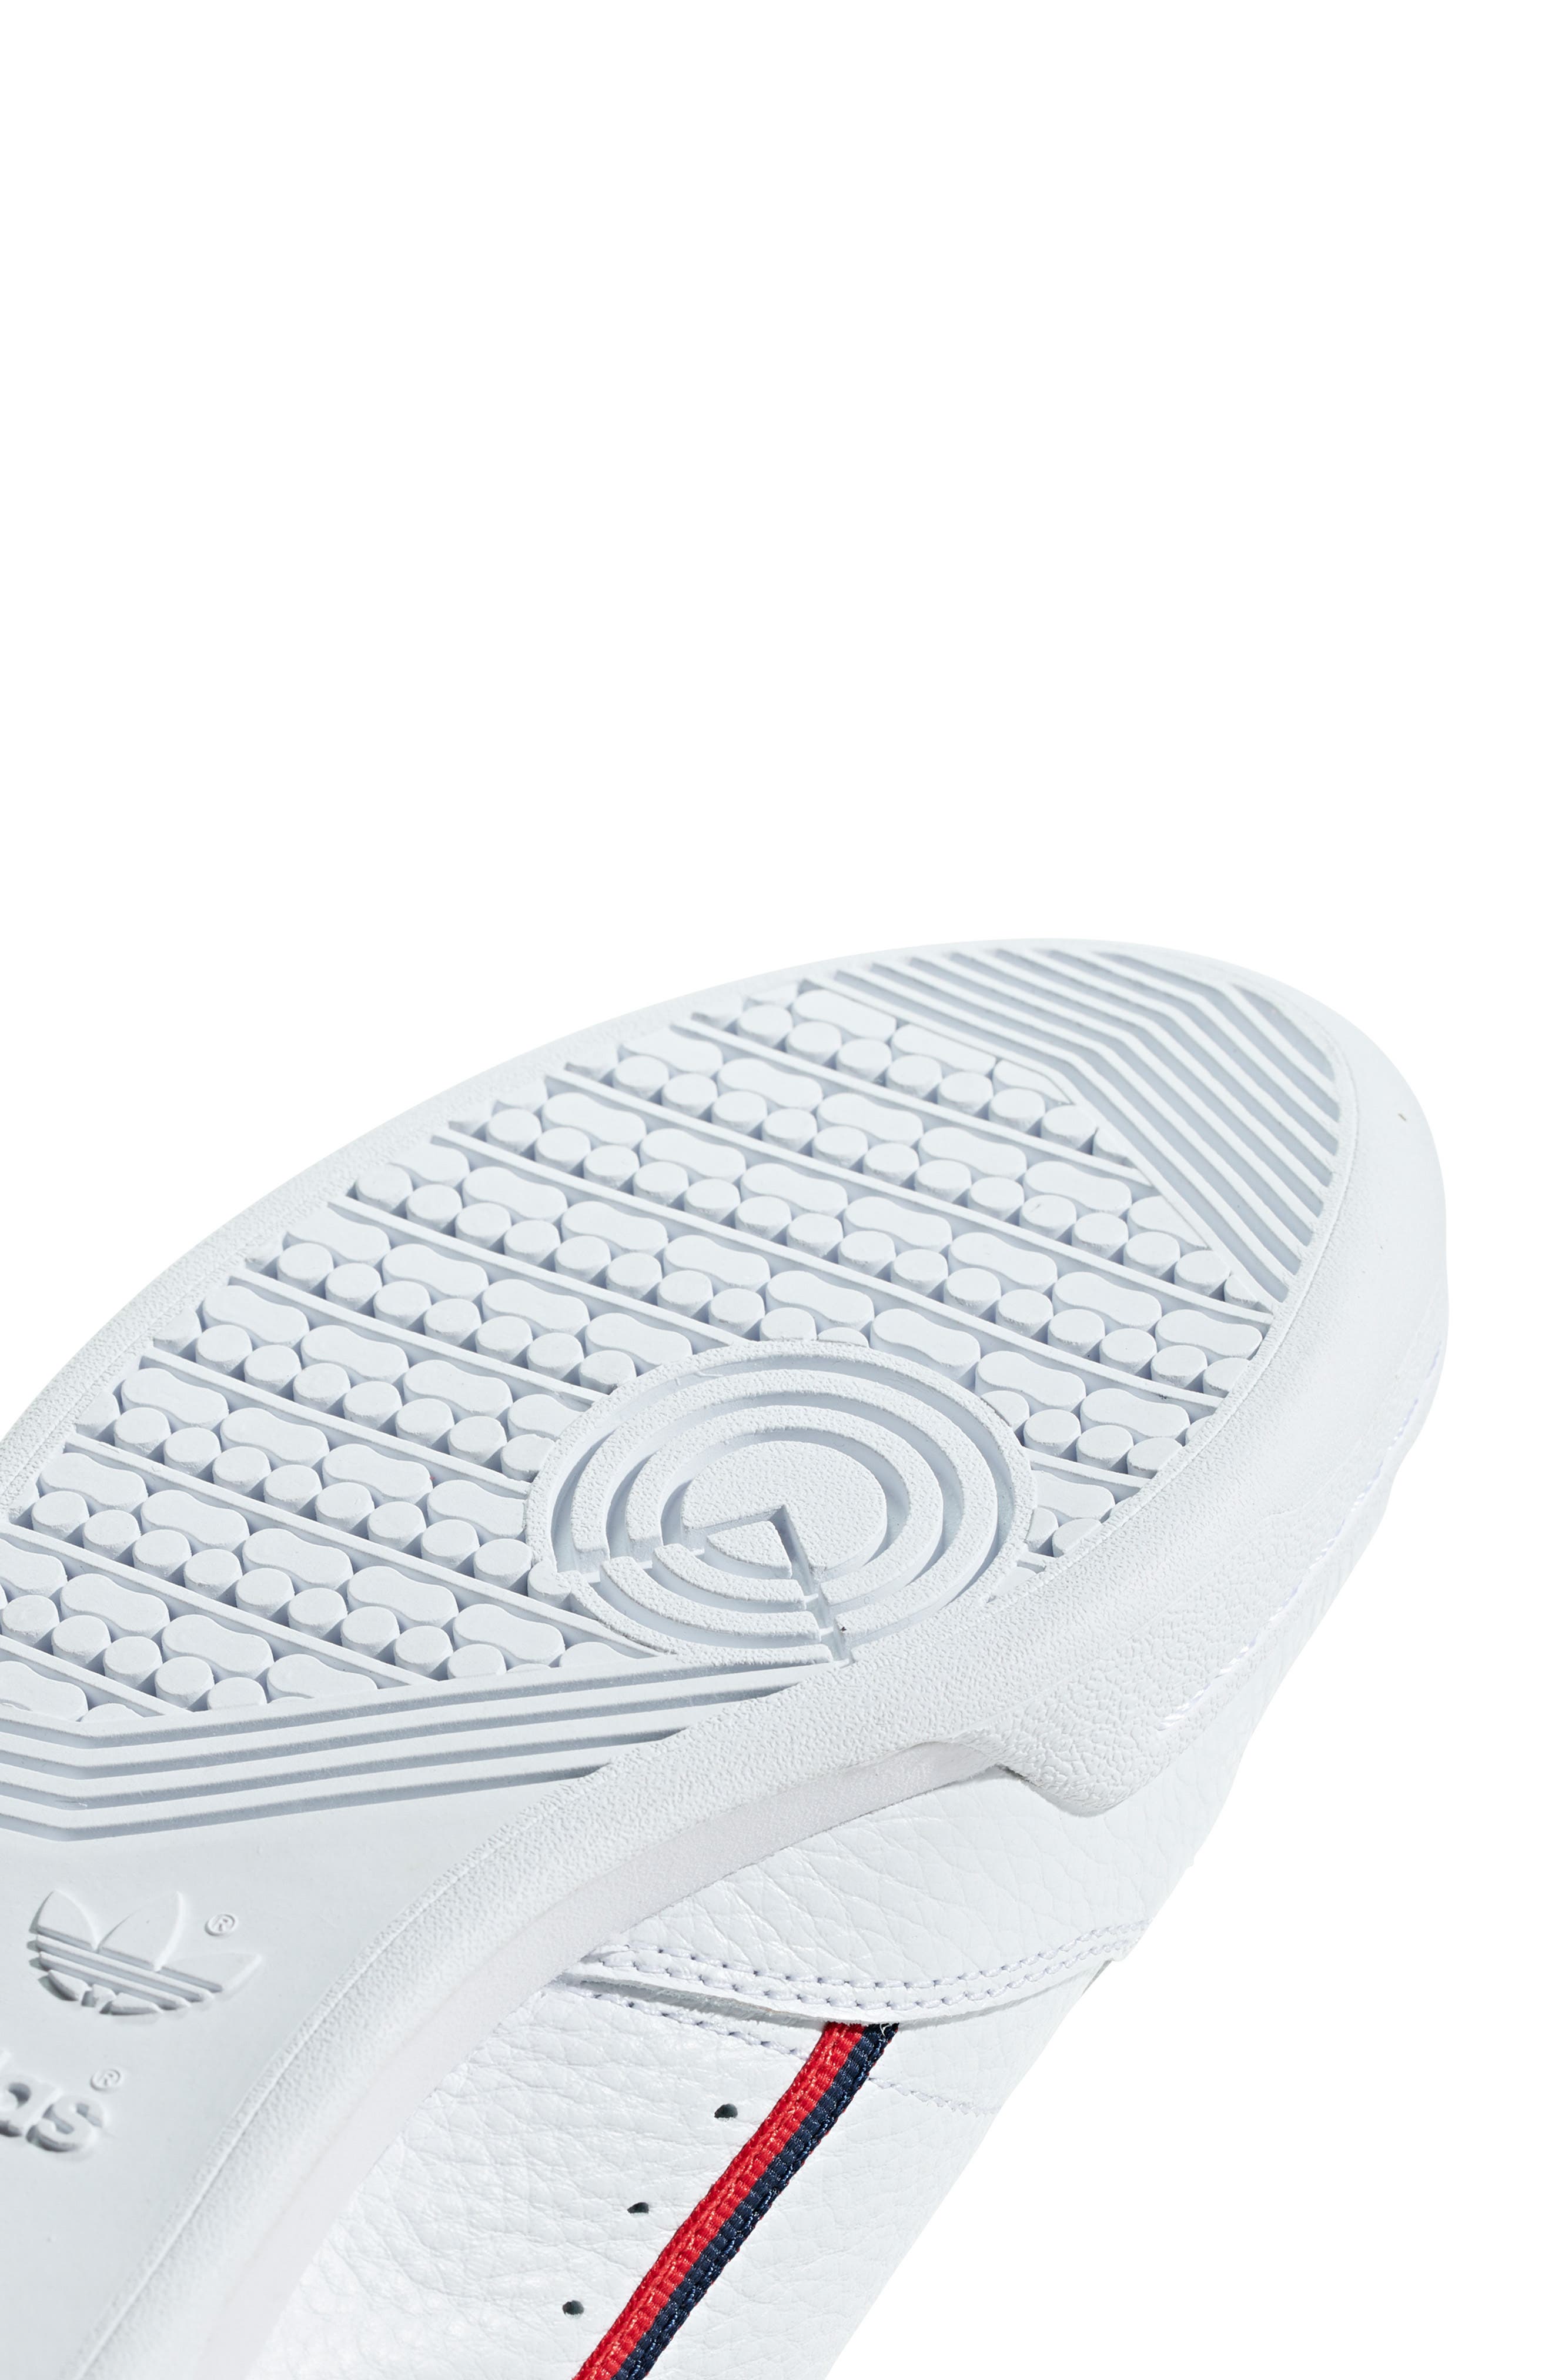 Adidas Originals Continental 80 Sneaker In White/ Scarlet